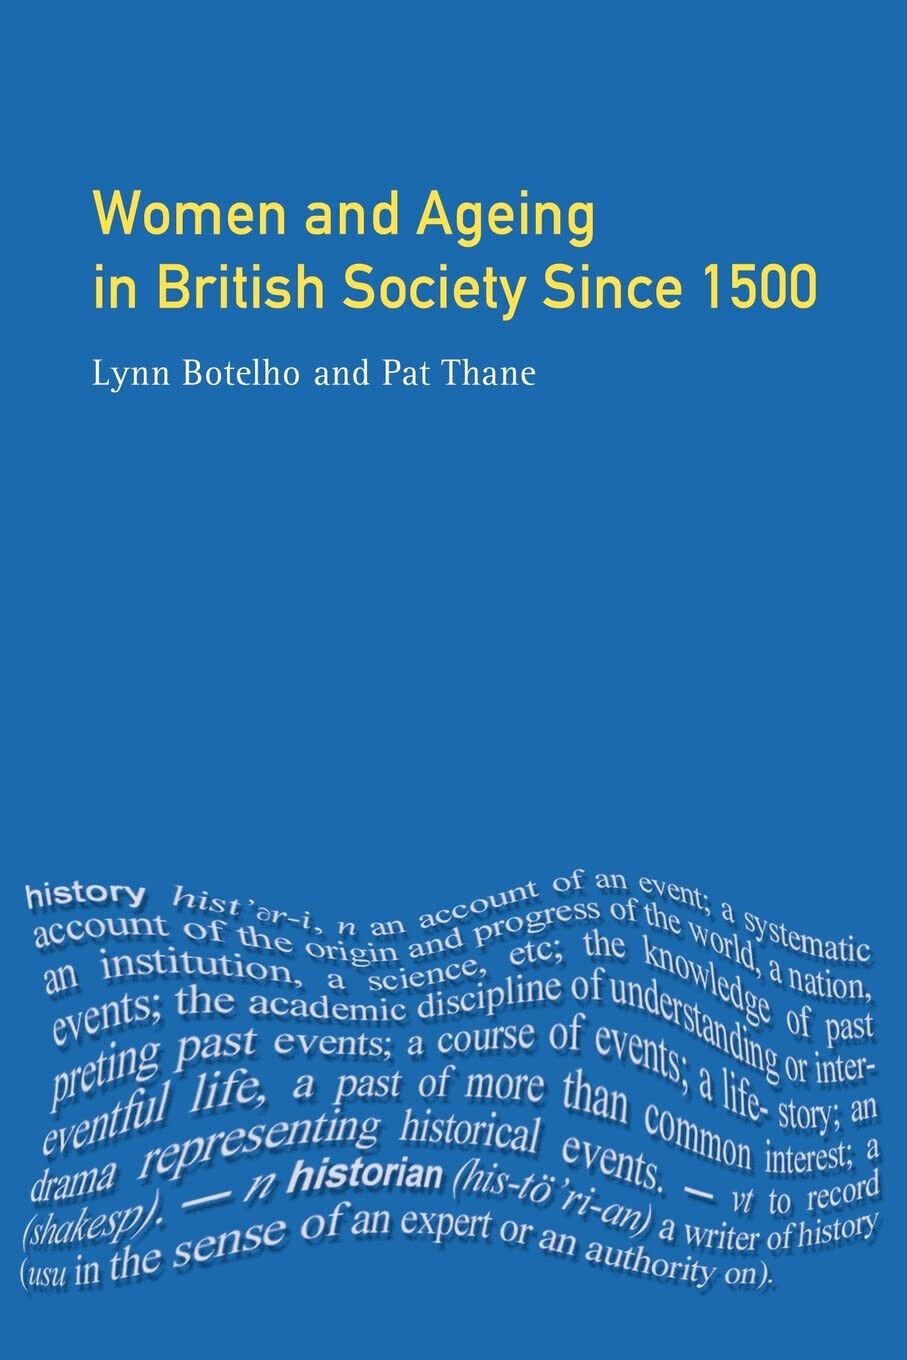 Women and Ageing in British Society since 1500 - Lynn Botelho, Pat Thane - 2001